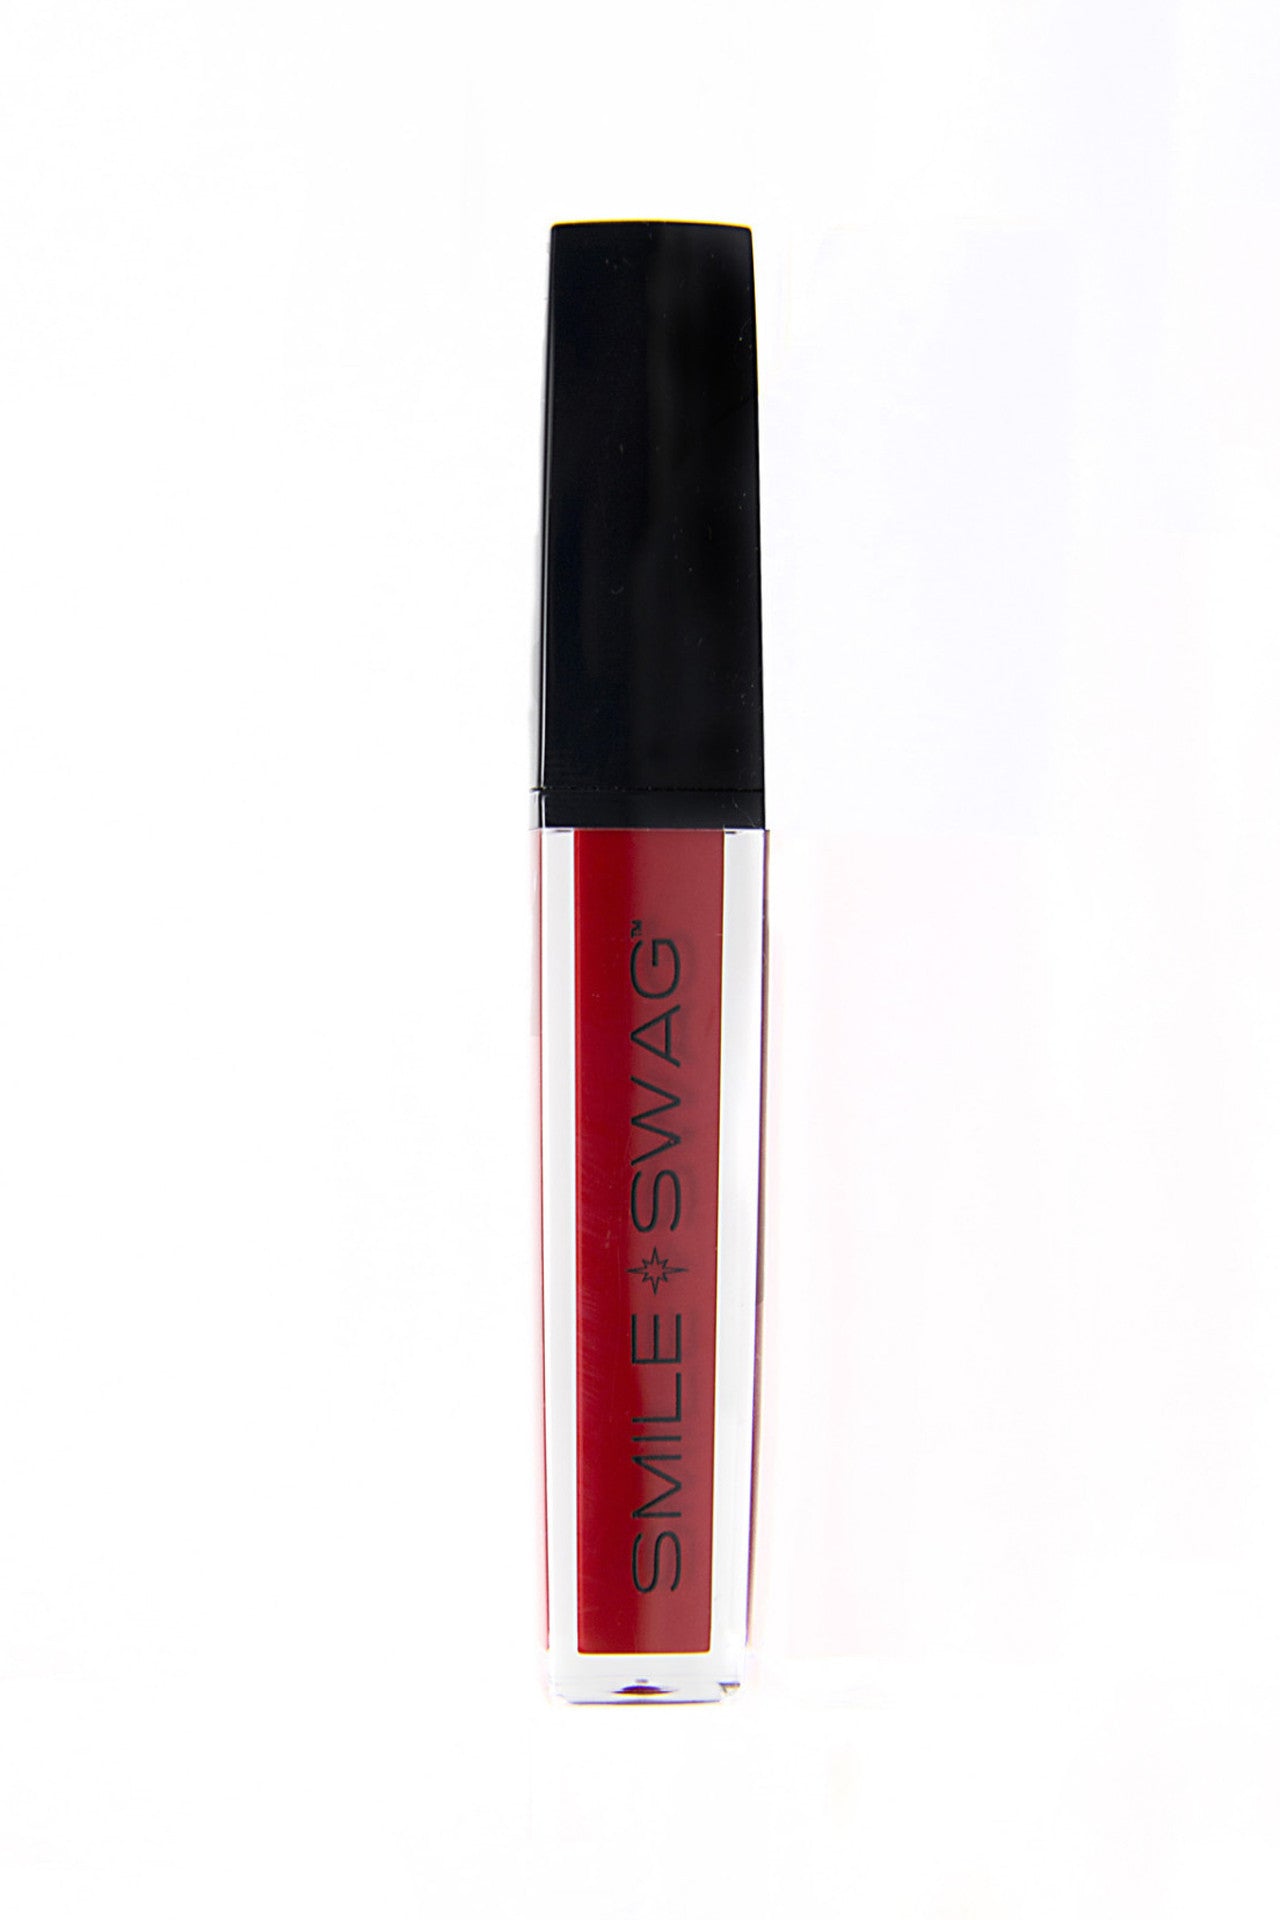 blue based red lipstick